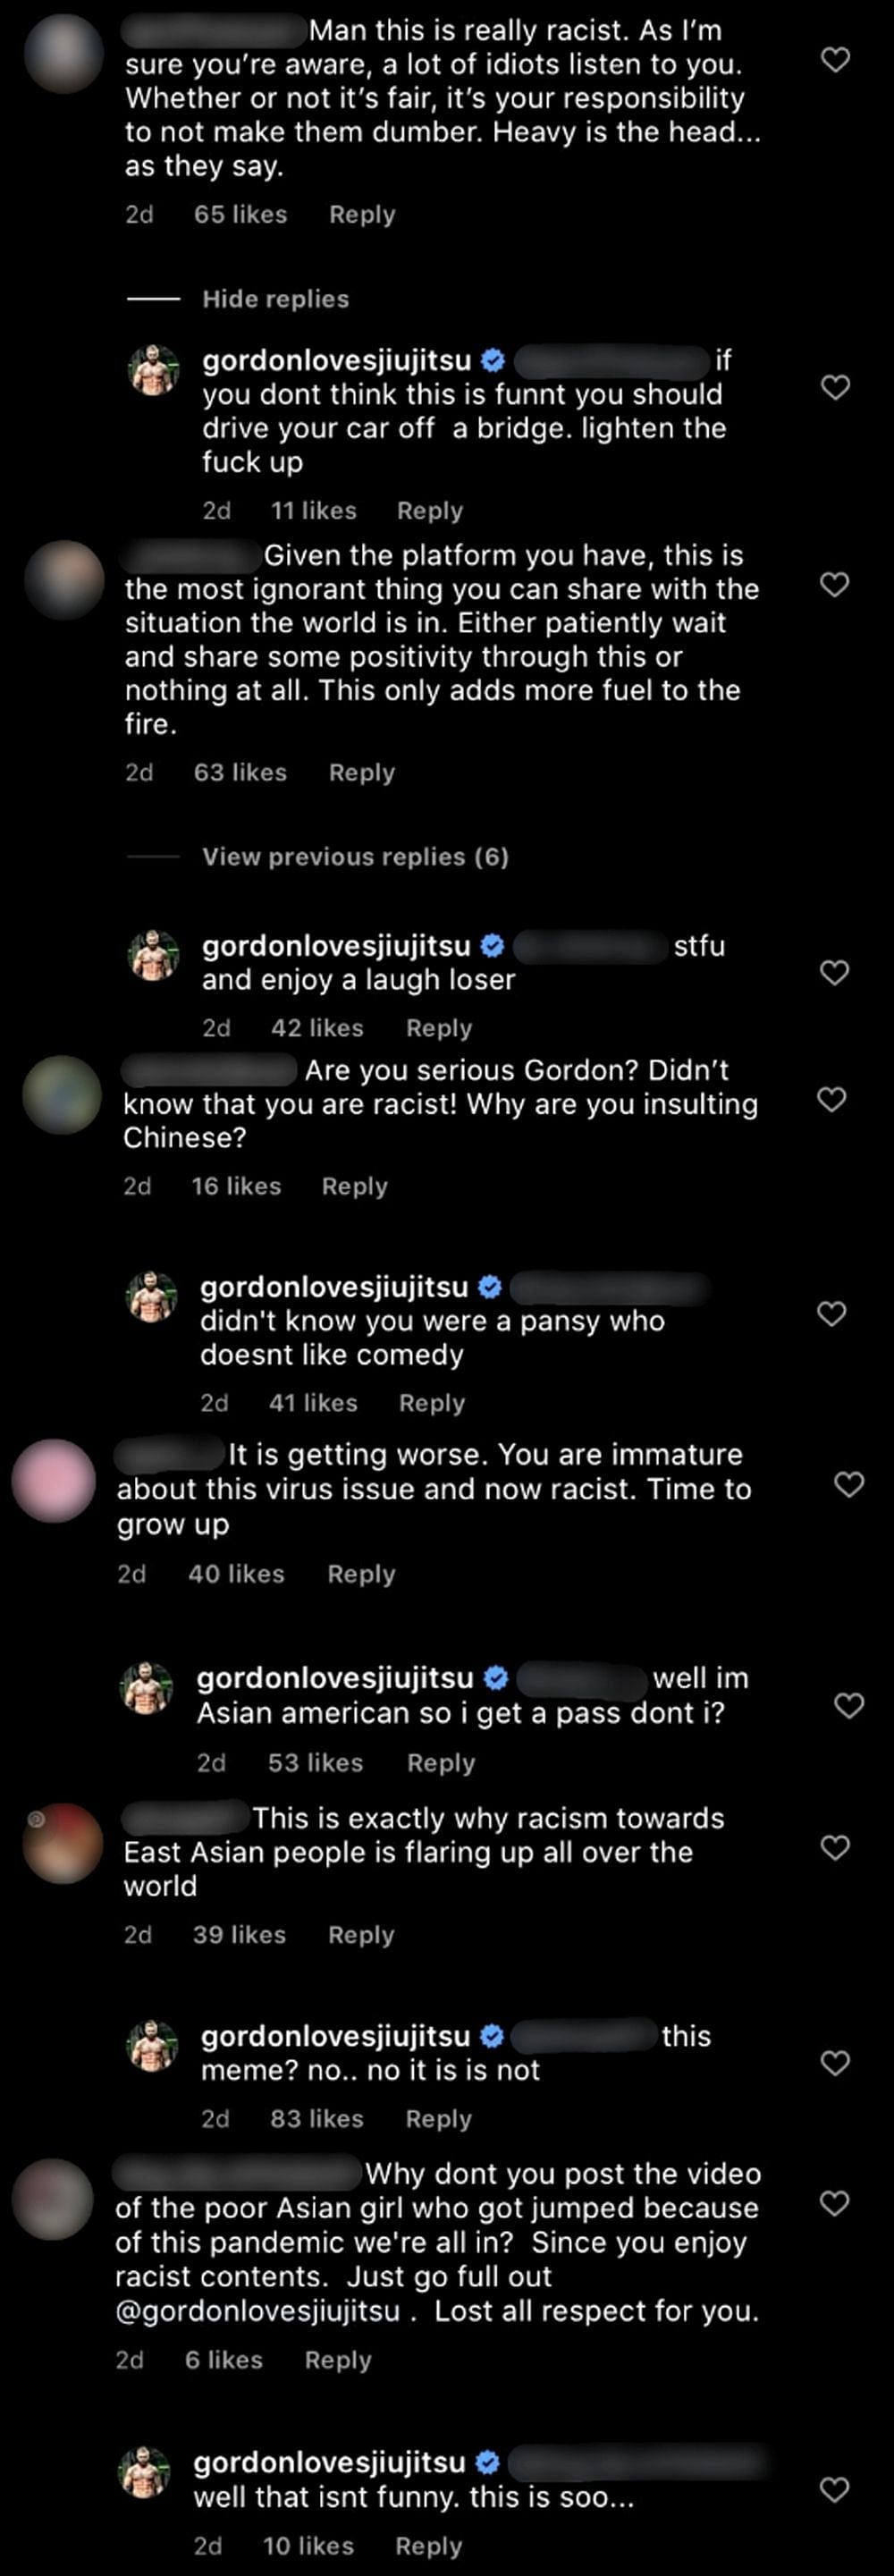 Fans react to Gordon Ryan post, accuse him of racism (Image courtesy: nextshark.com]